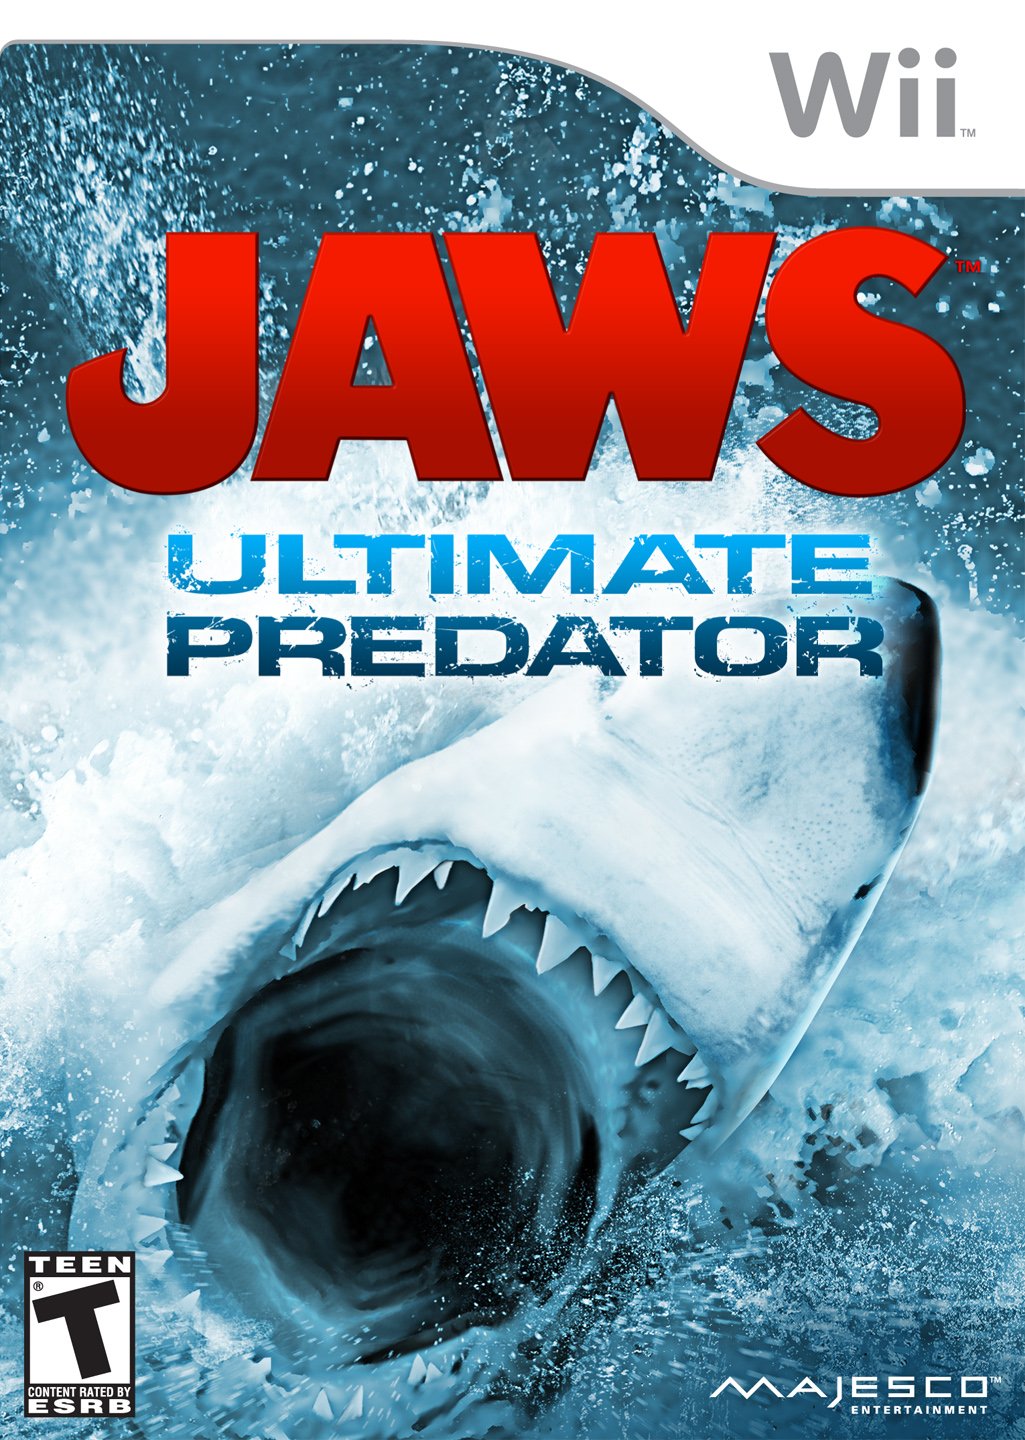 Jaws Ultimate Predator Wii